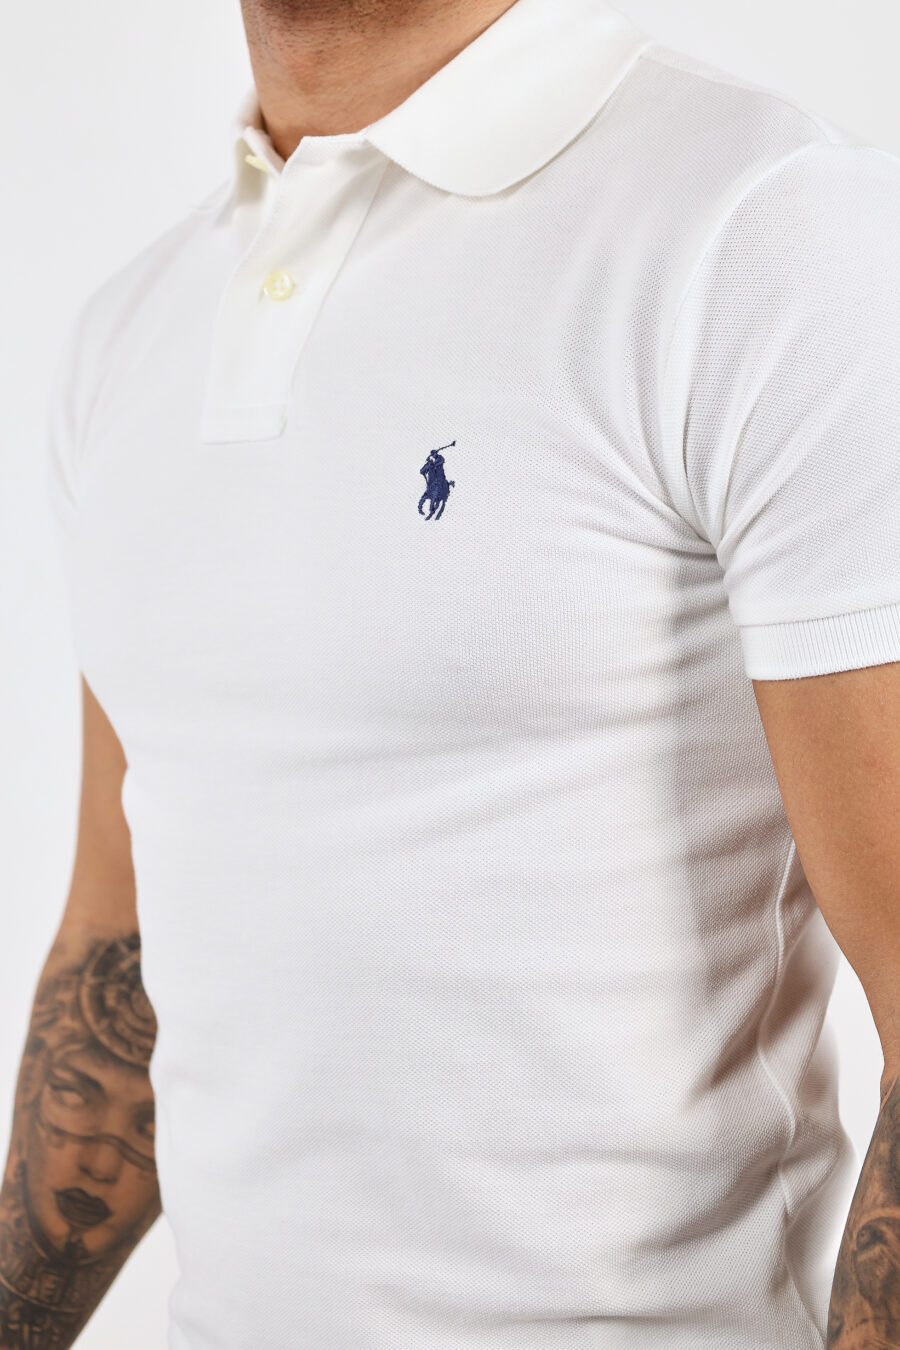 Pólo branco com mini-logotipo "polo" - BLS Fashion 186